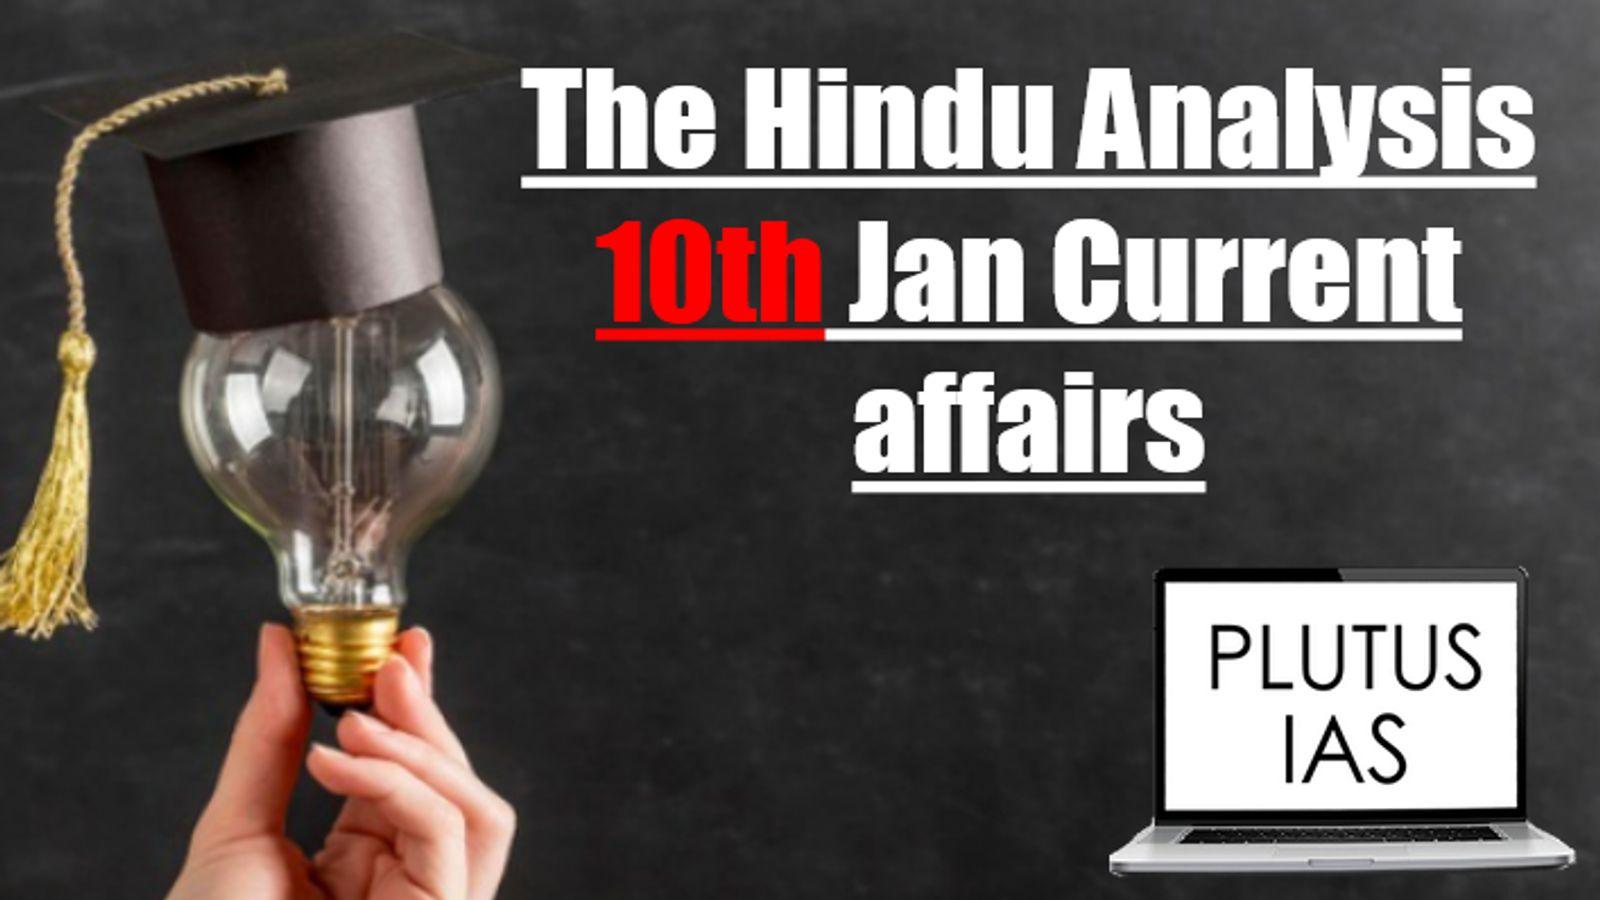 The Hindu Analysis 10th December